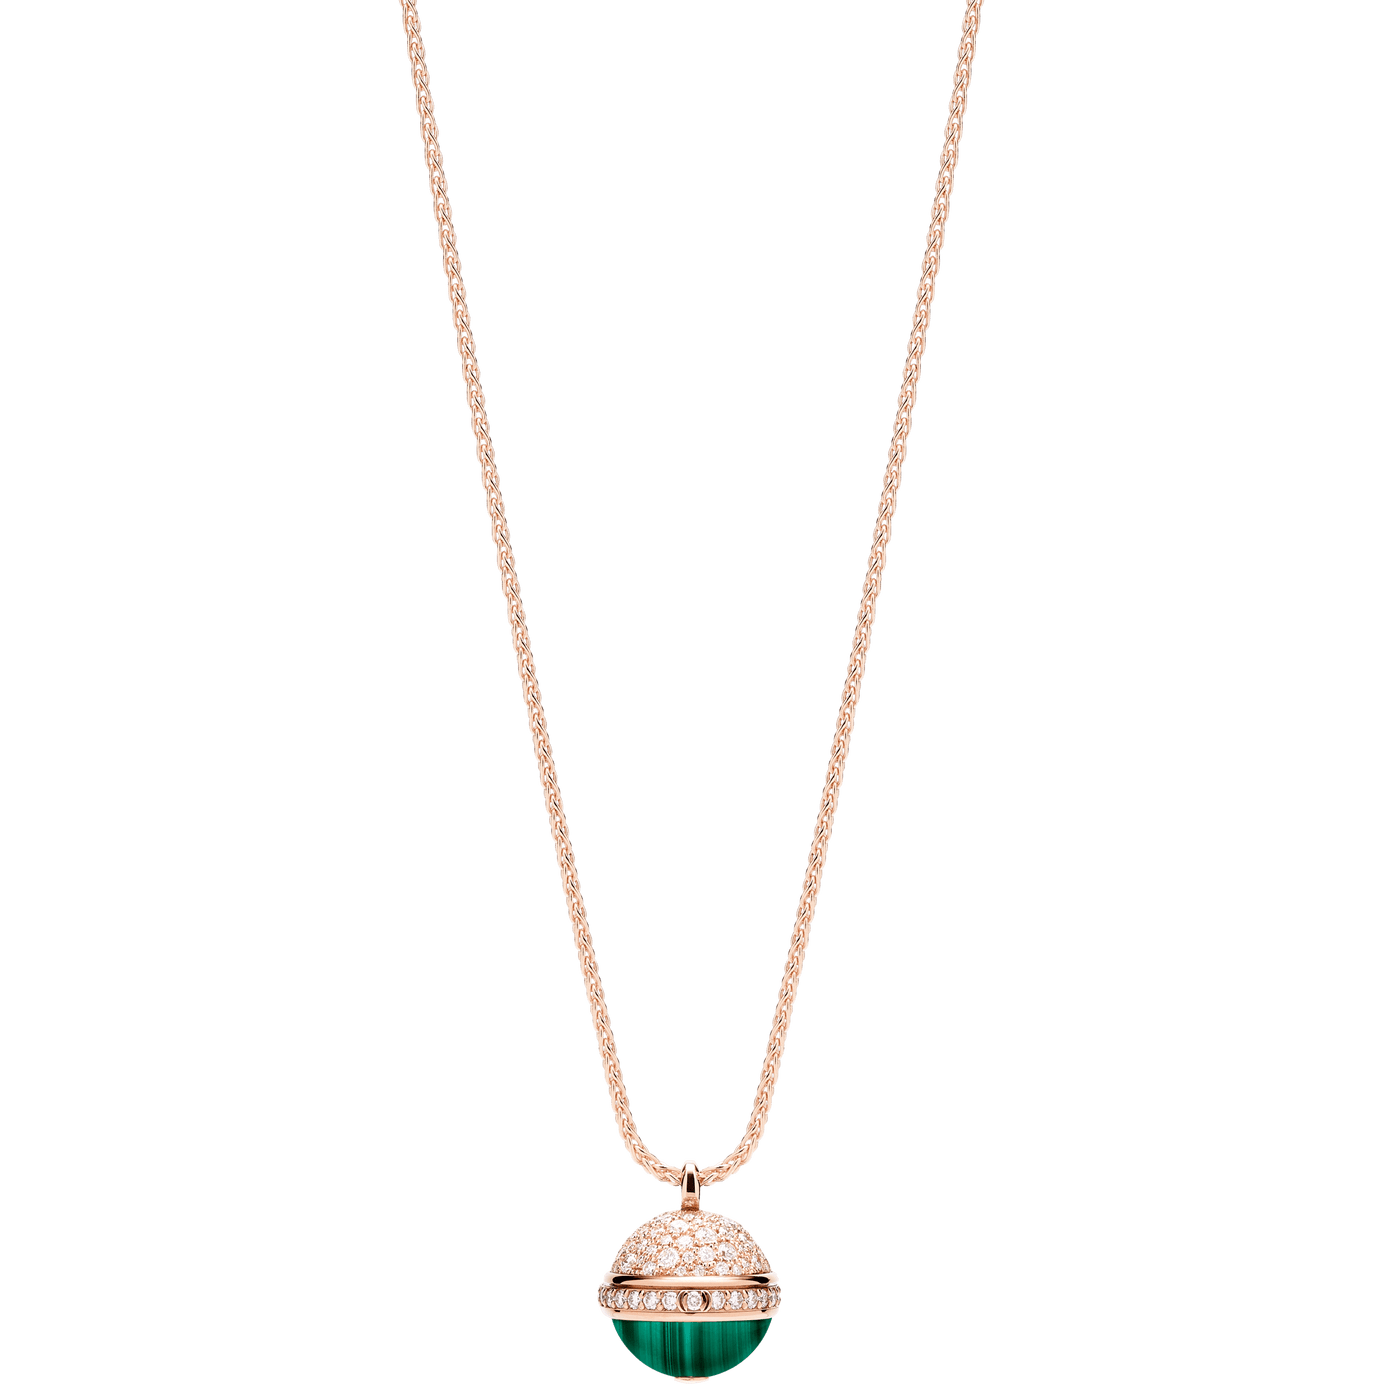 Low Price Piaget Possession Malachite & Diamond Pendant Ladies